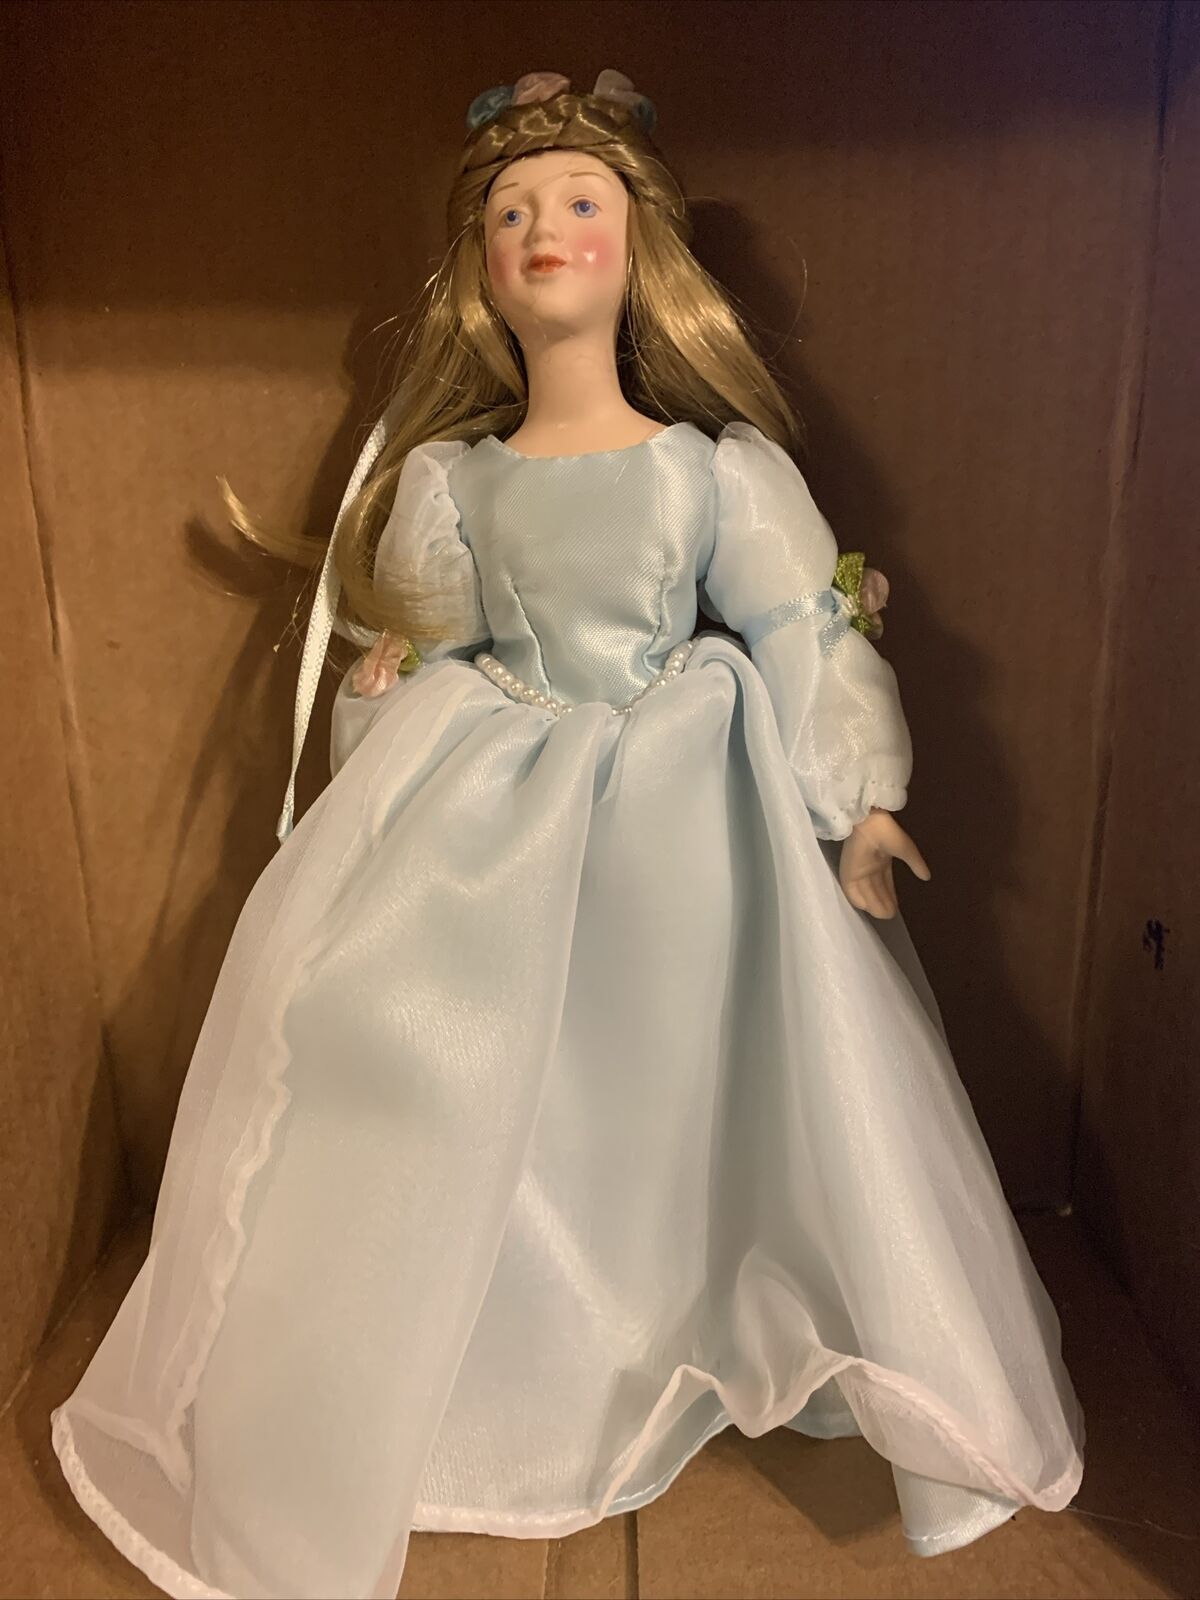 1984 NIB Avon Cinderella Doll modern bisque. The Fairy Tale Doll Collection.